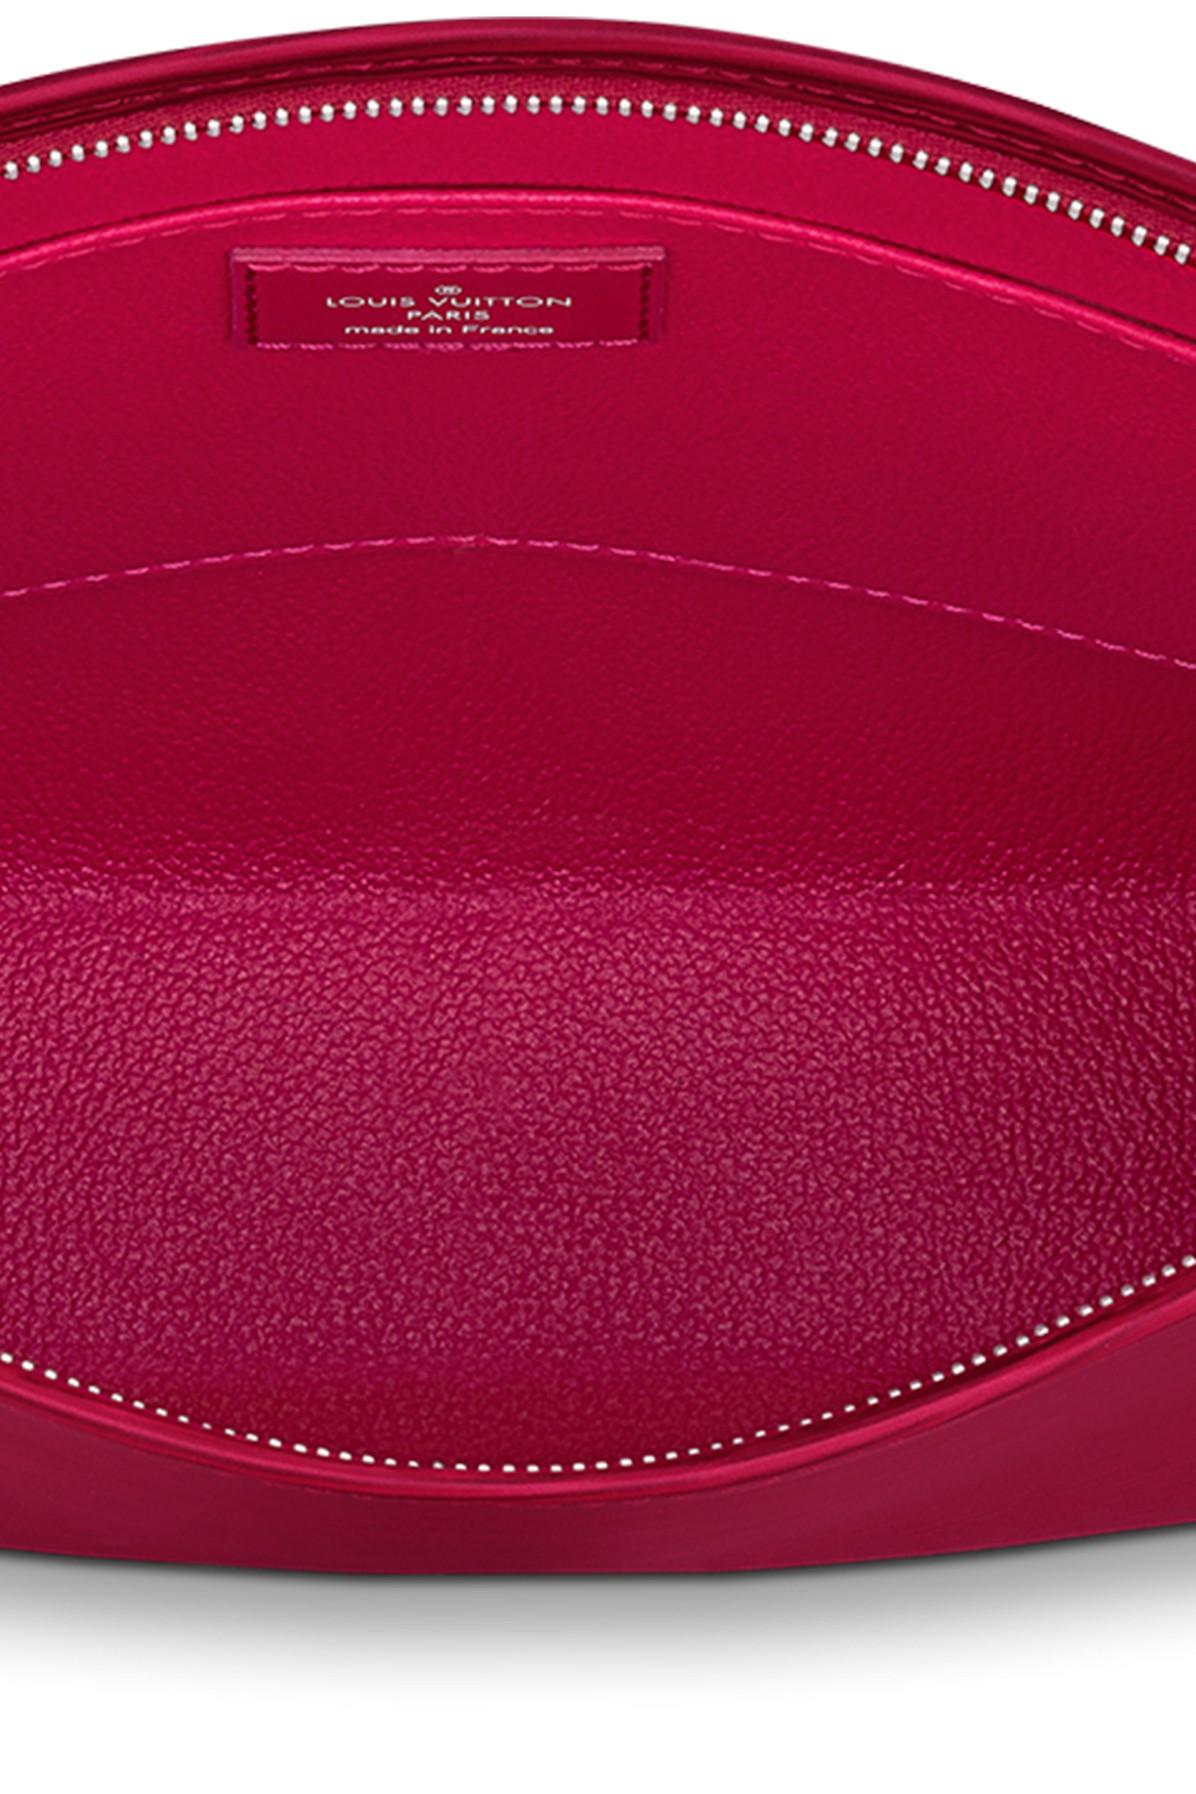 Louis Vuitton Epi Toiletry Pouch 26 - Black Clutches, Handbags